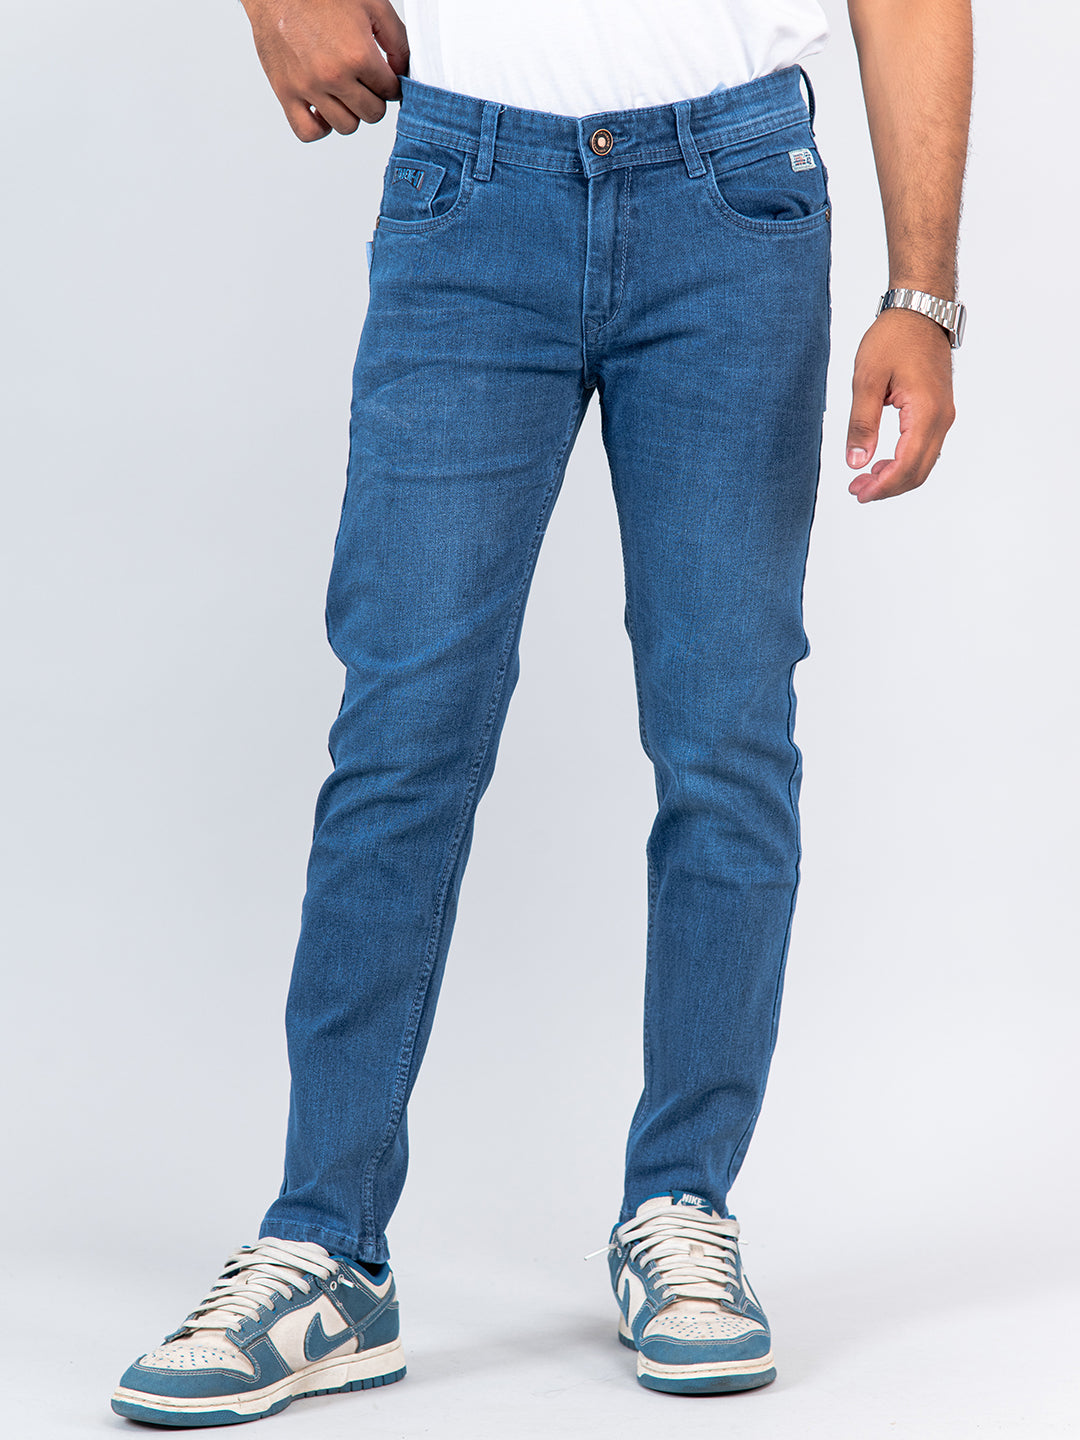 Seine High Rise Skinny Jeans 32 Inch - Distressed Light Blue | Universal  Standard